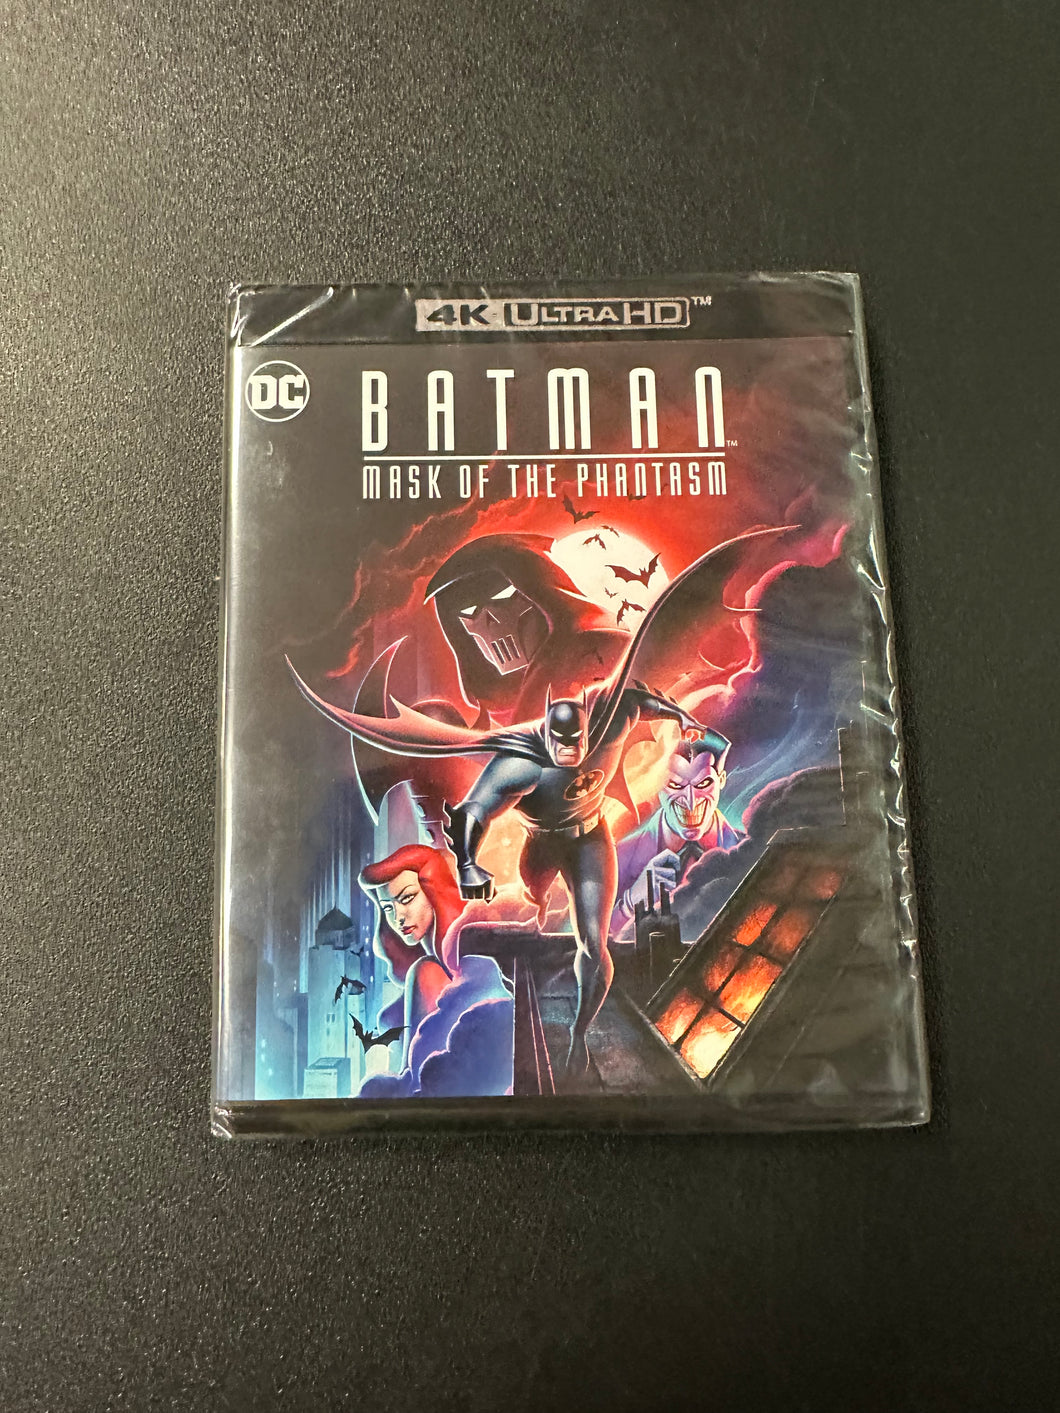 DC Batman Mask of the Phantasm [4K Ultra HD] (NEW) Sealed